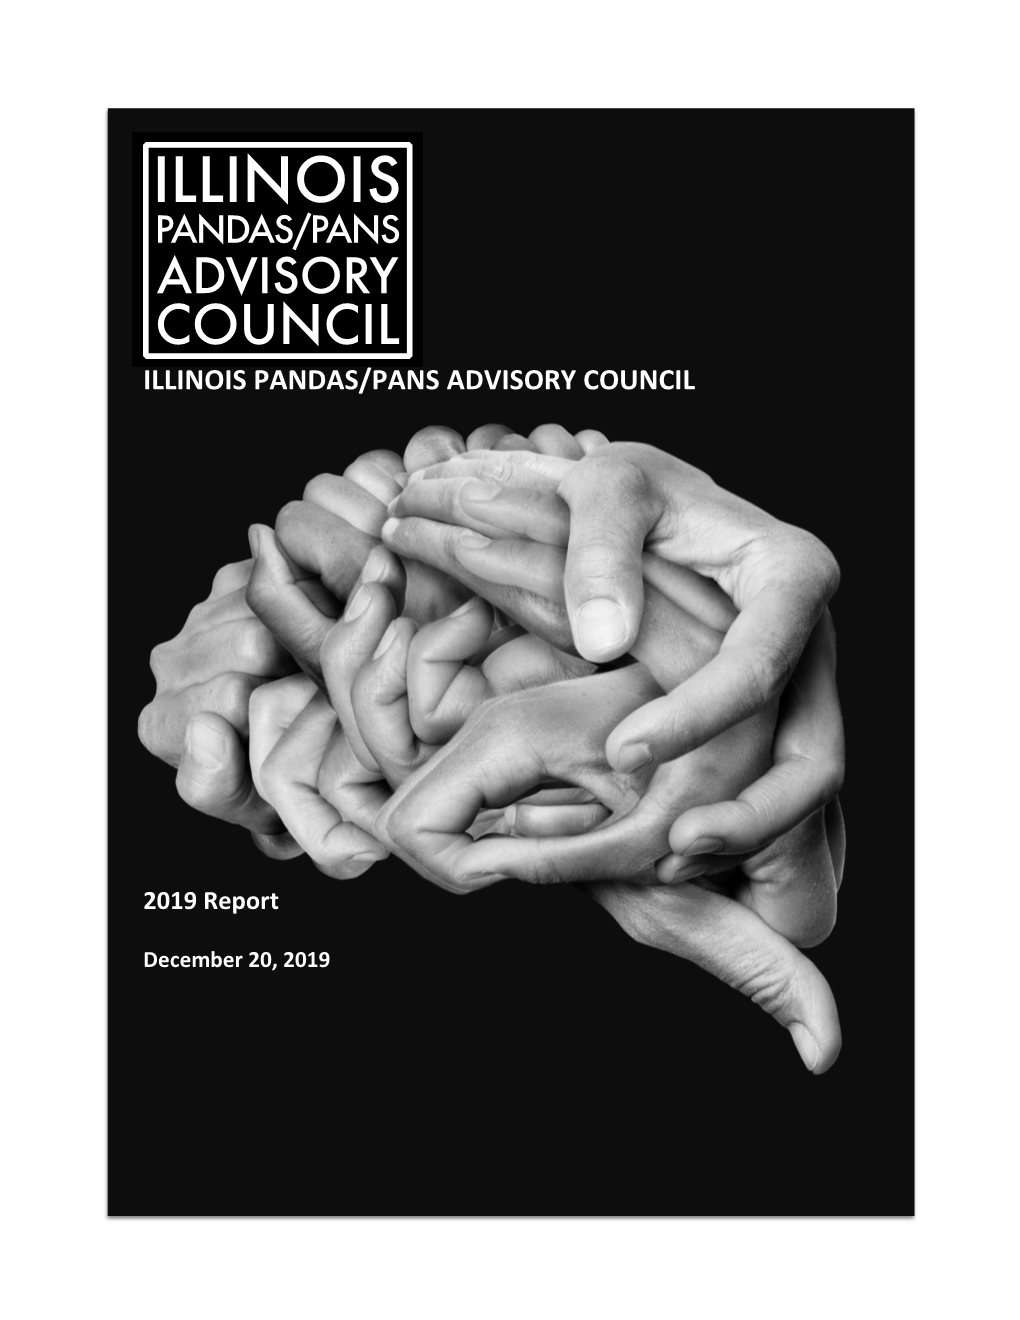 Illinois PANDAS/PANS Advisory Council Report